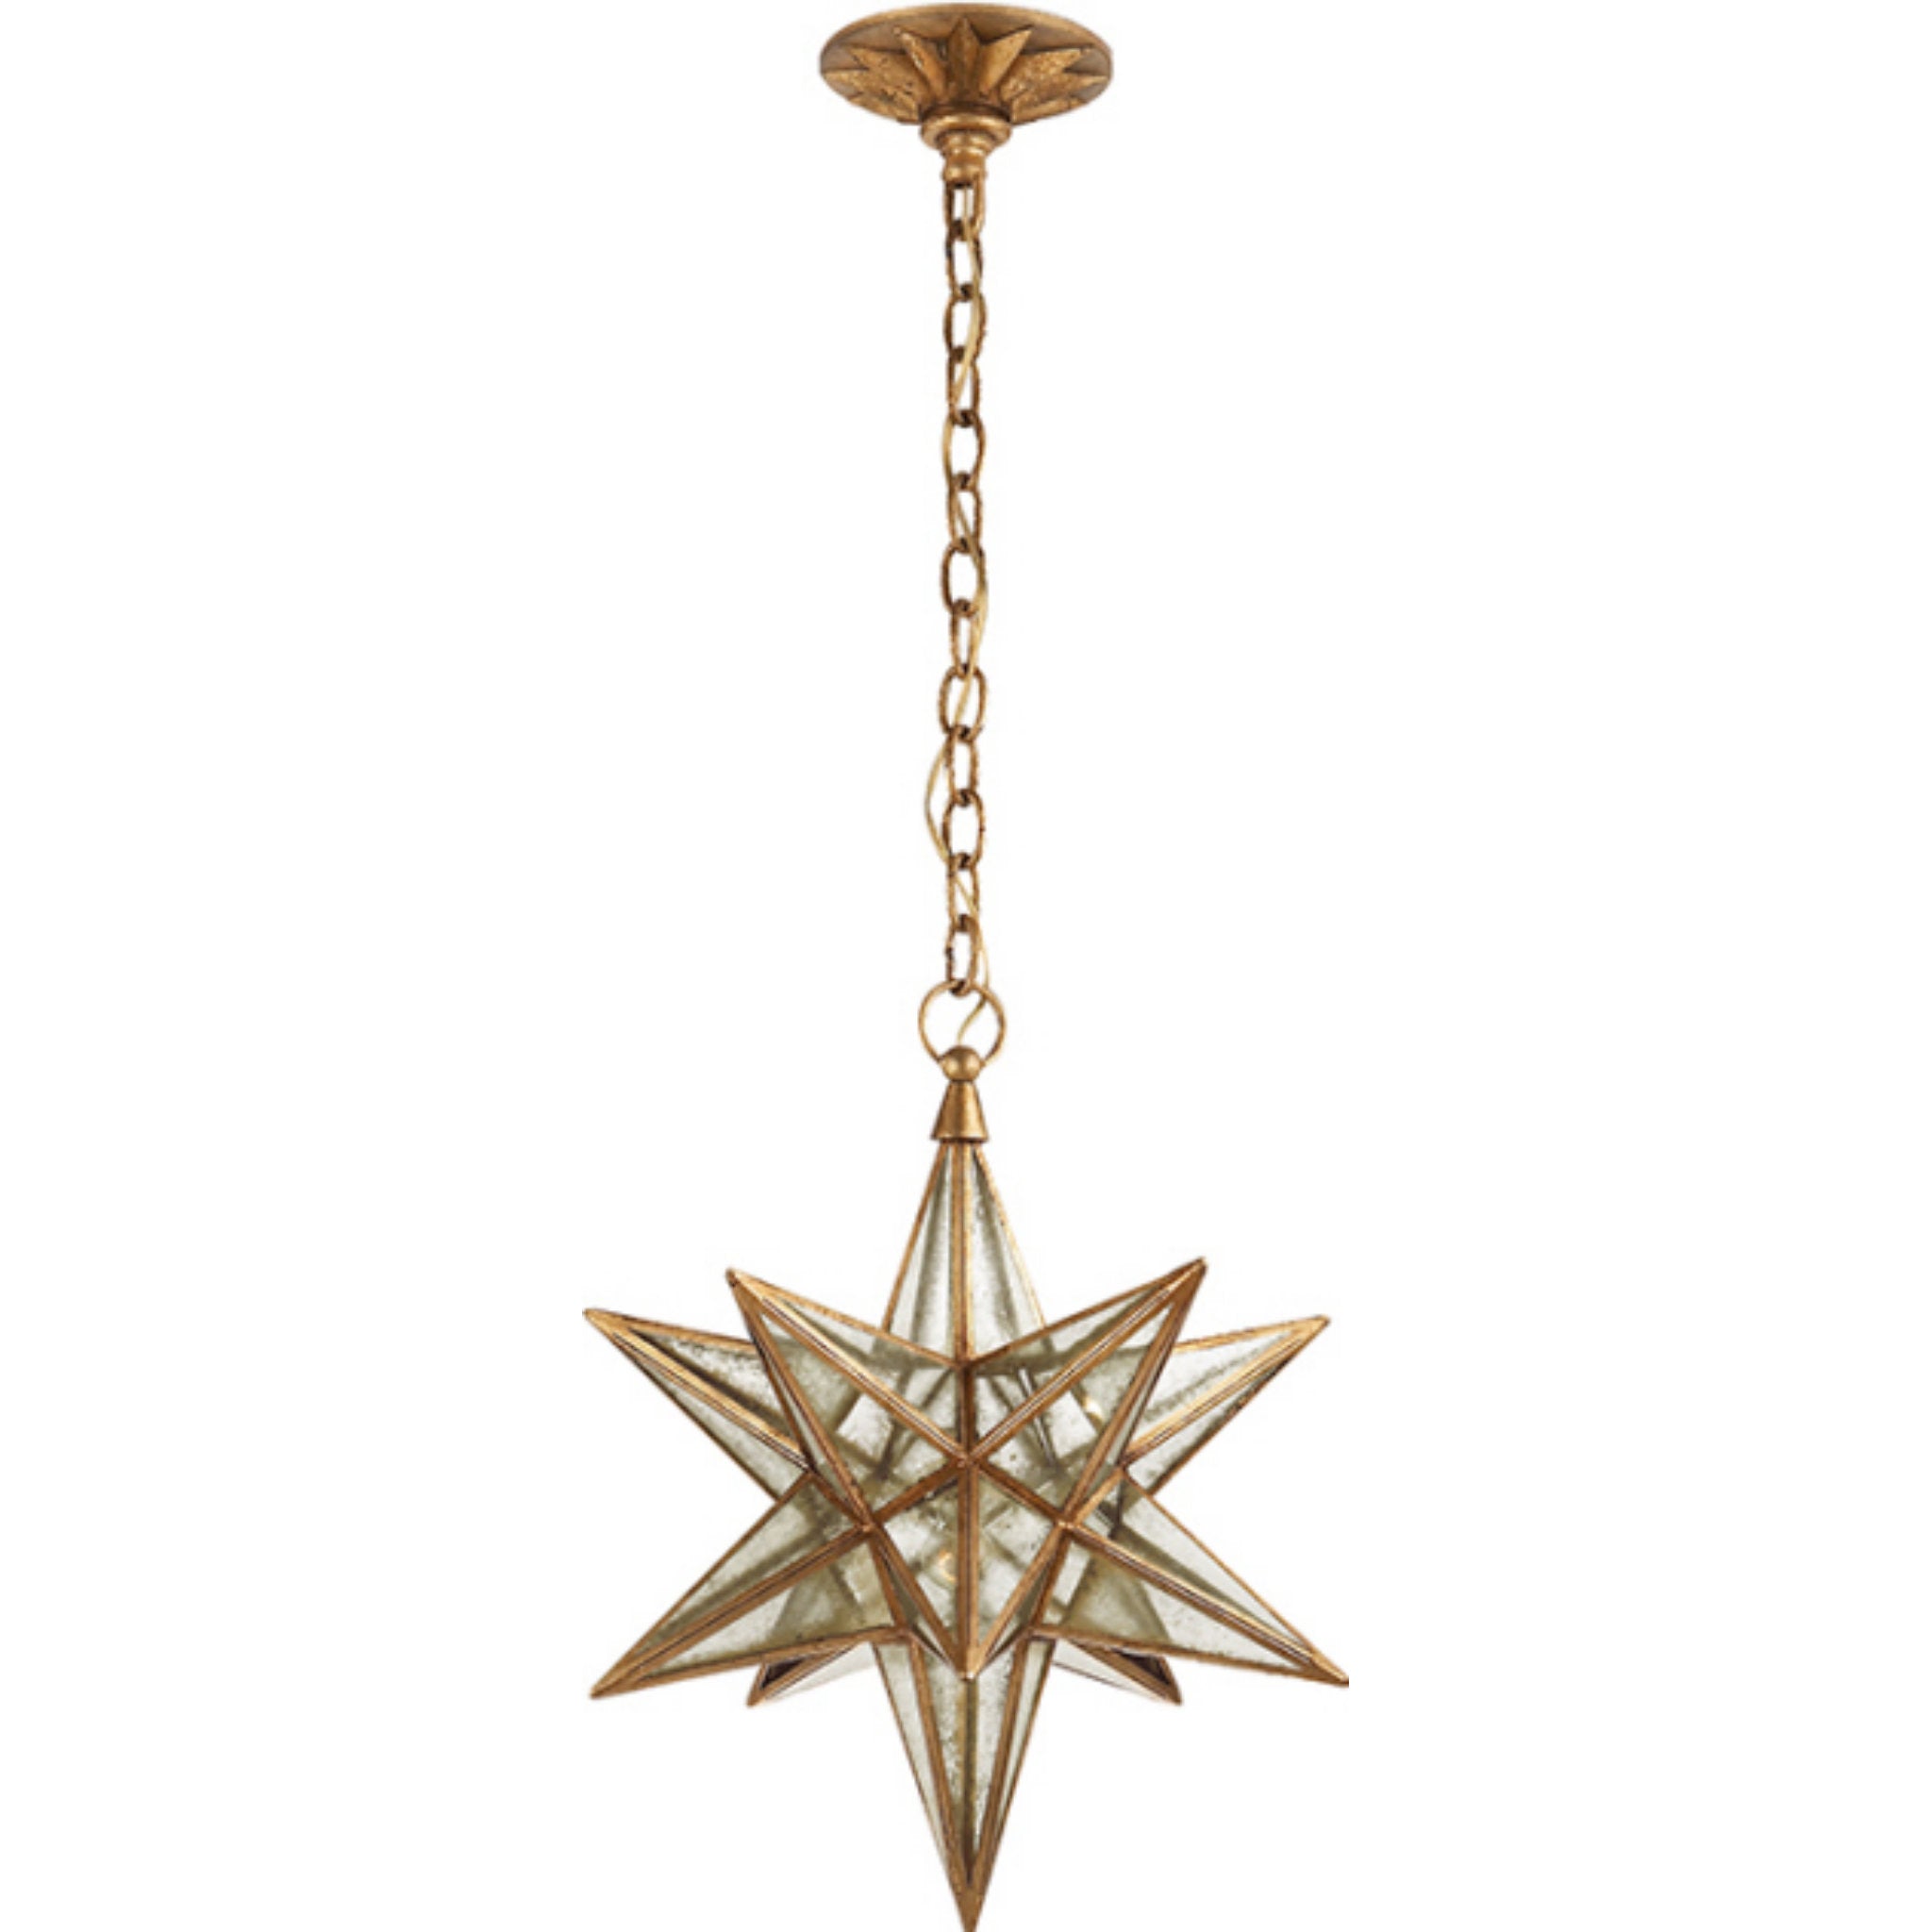 Chapman & Myers Moravian Medium Star Lantern in Gilded Iron with Antique Mirror